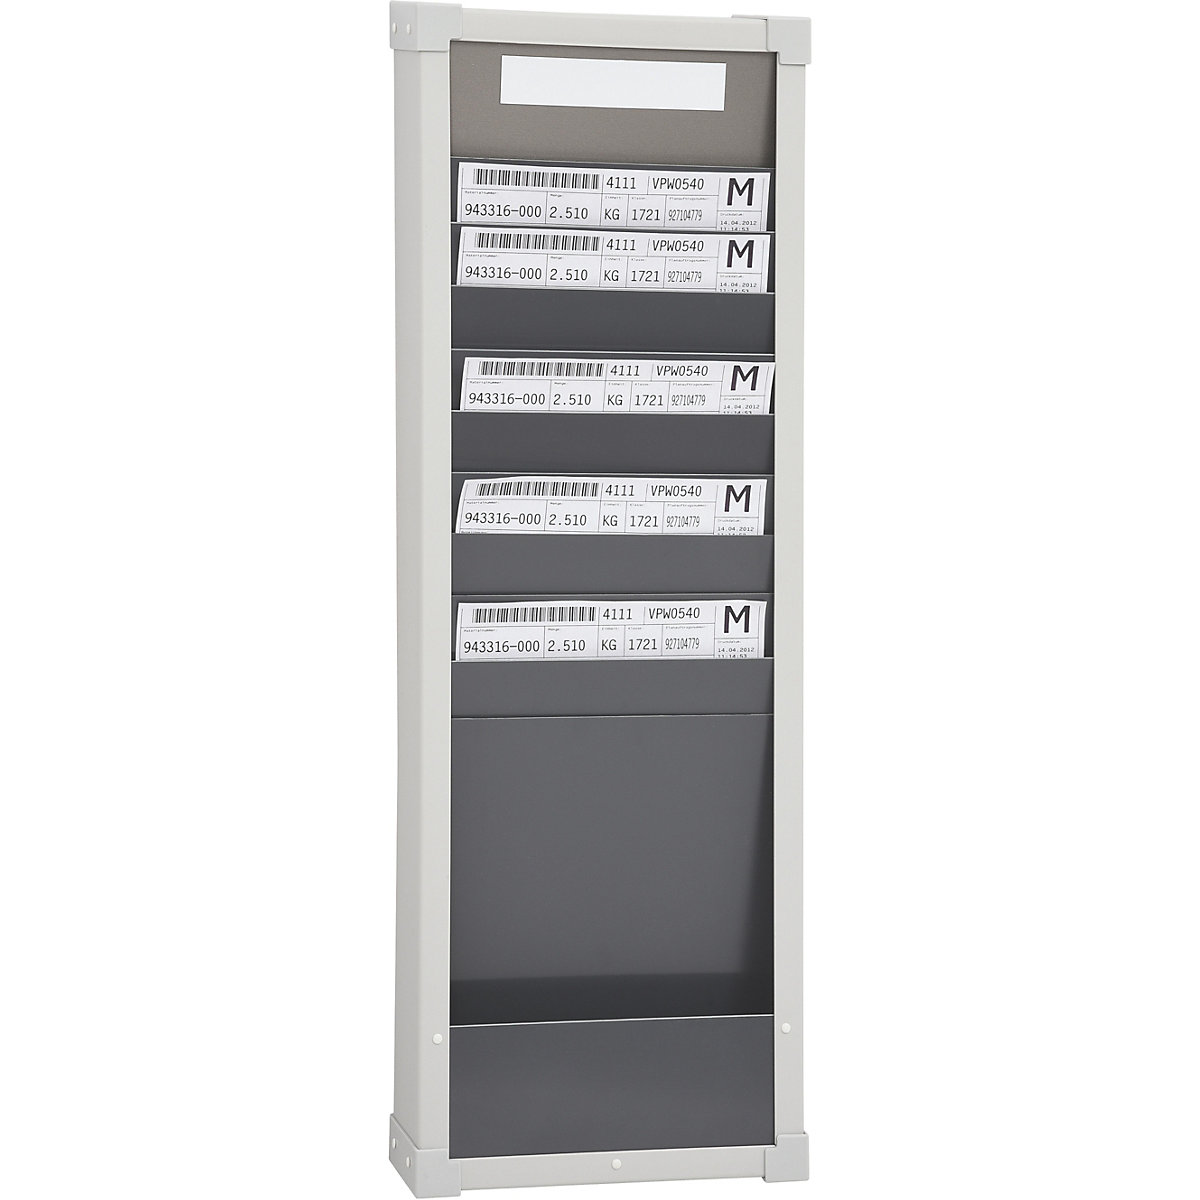 Panel modular clasificador para documentos – EICHNER, 10 compartimentos, altura 750 mm, con 1 hilera-9